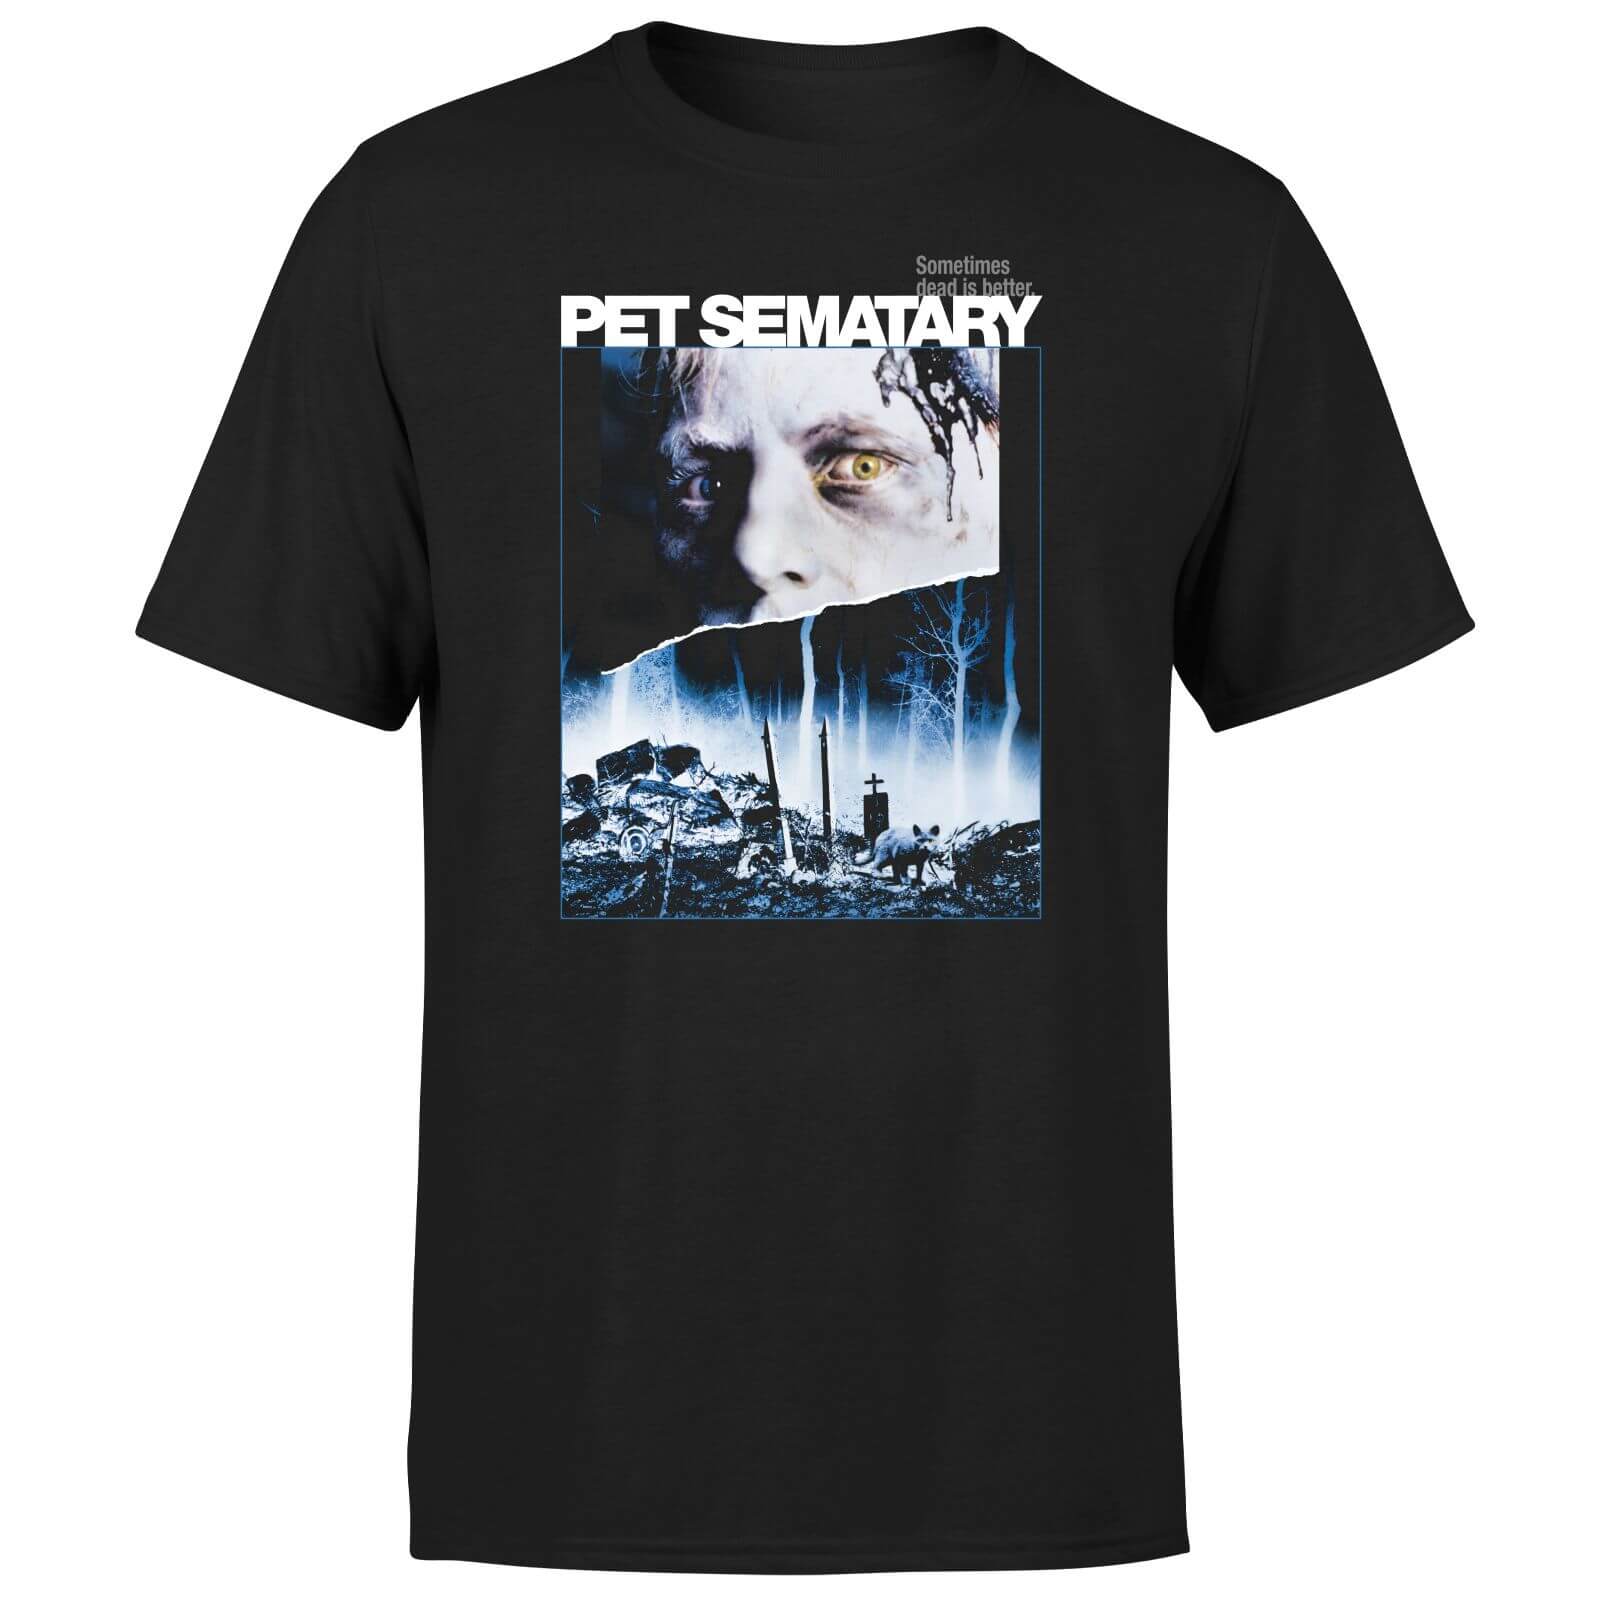 Pet Semetary Sometimes Dead Is Better Men's T-Shirt - Black - XS - Black